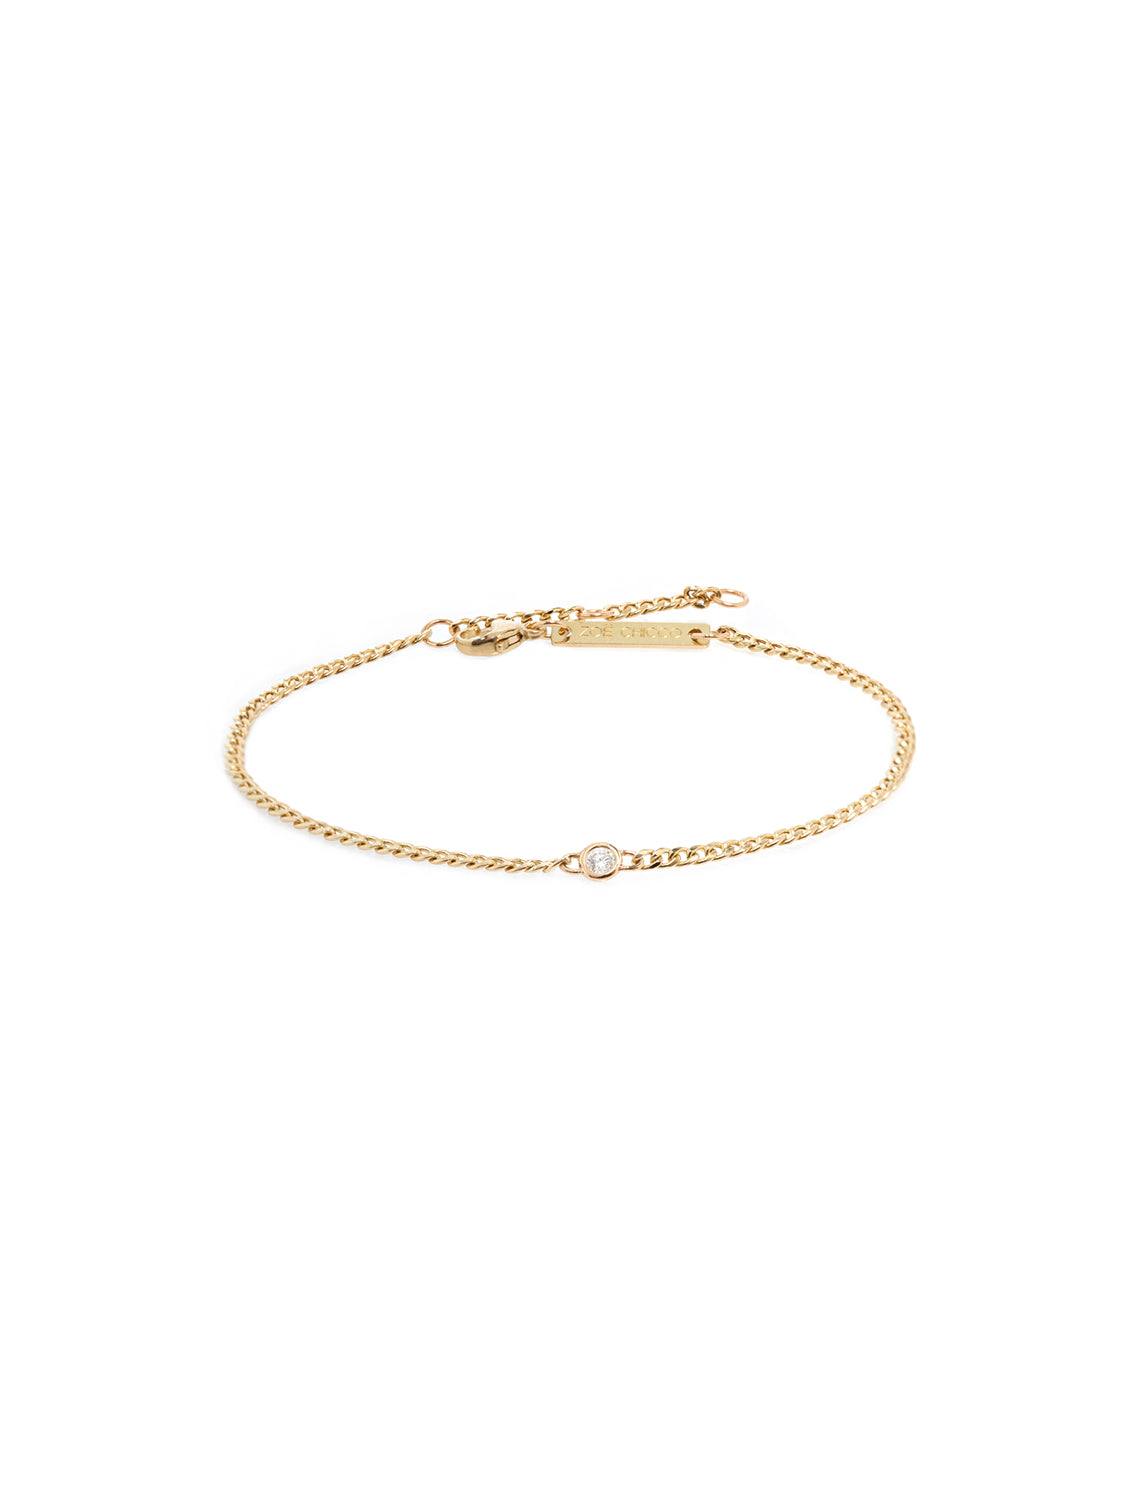 14K Yellow Gold Diamond Tennis Bracelet 1.0ctw — Koehn & Koehn Jewelers -  Rock Your World